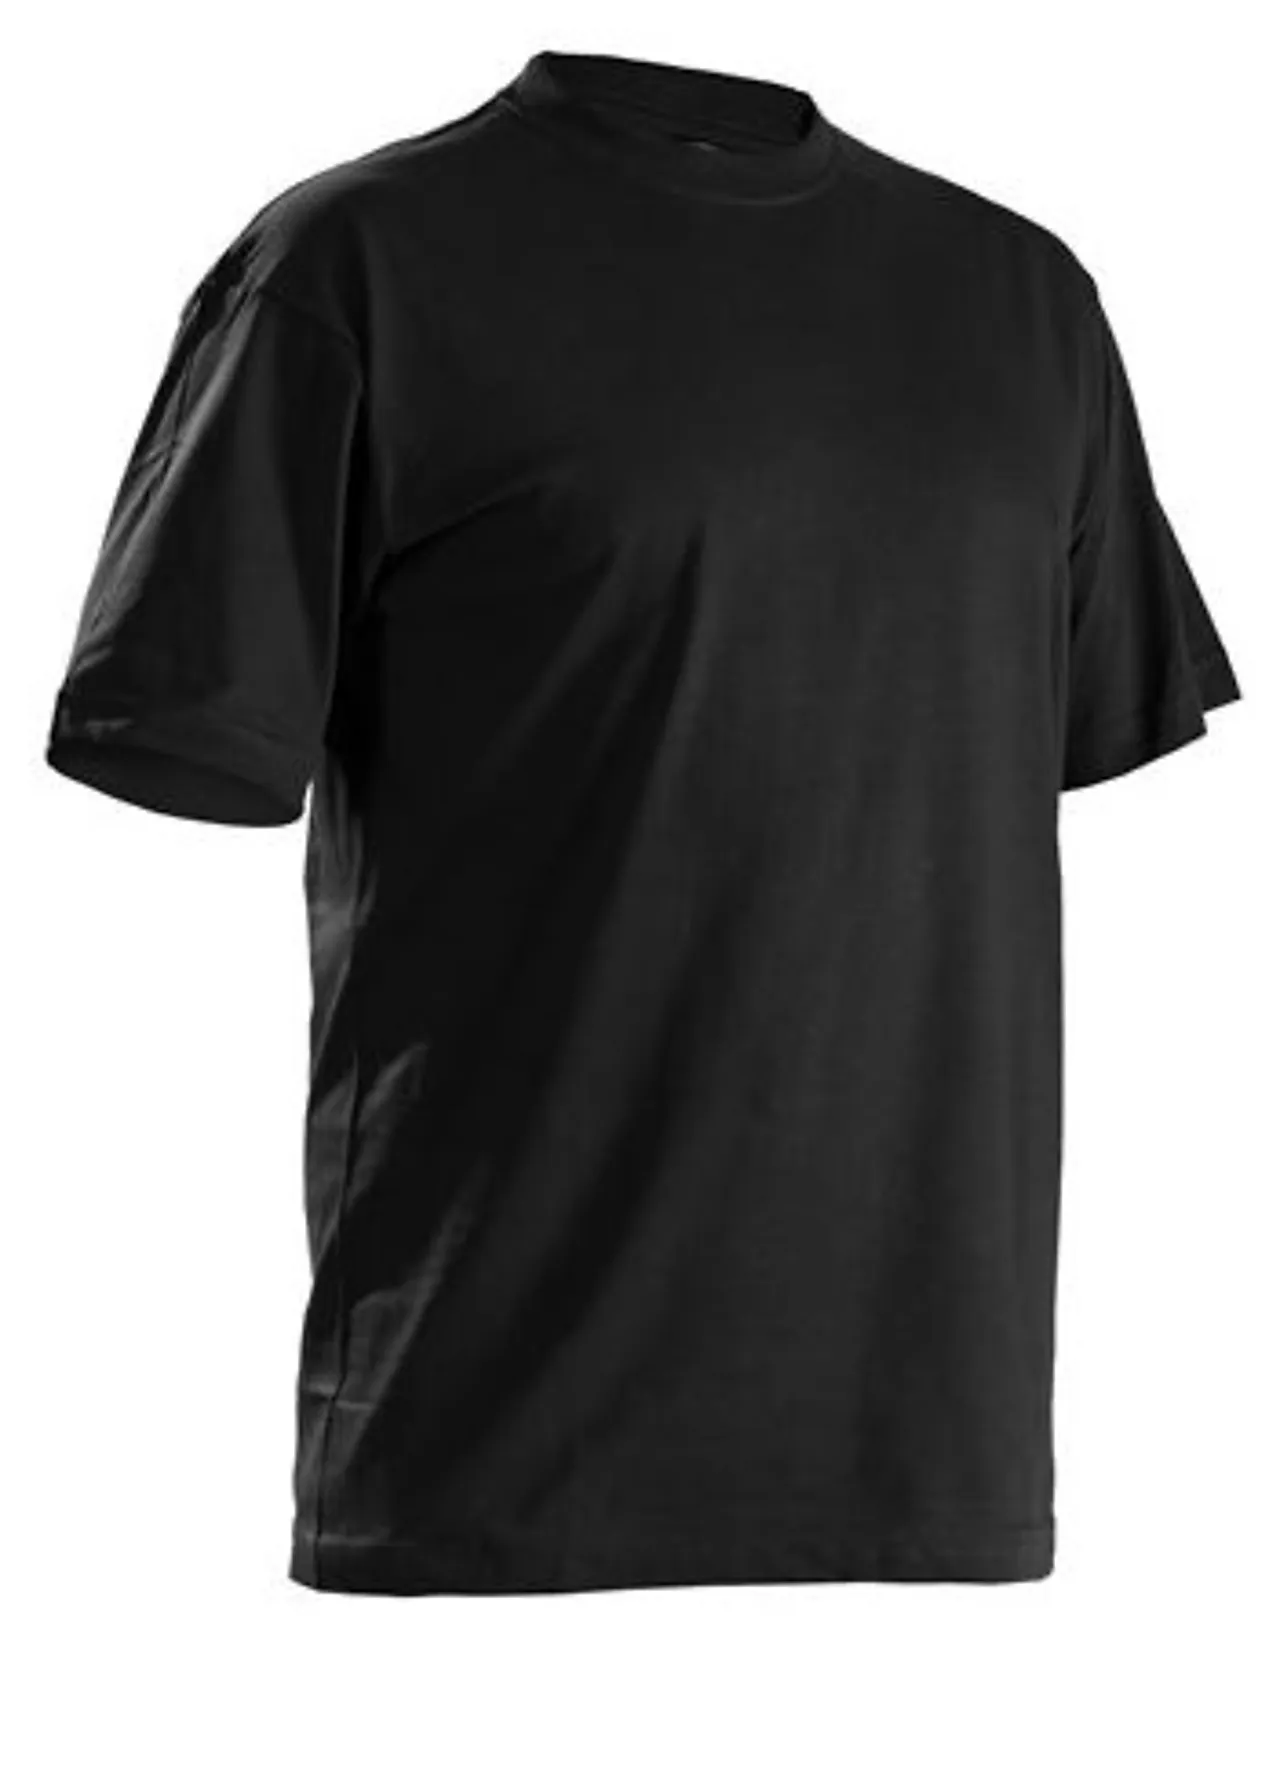 T-skjorte 5 pakk 332510429900xxx 5 pakk svart null - null - 3 - Miniatyr